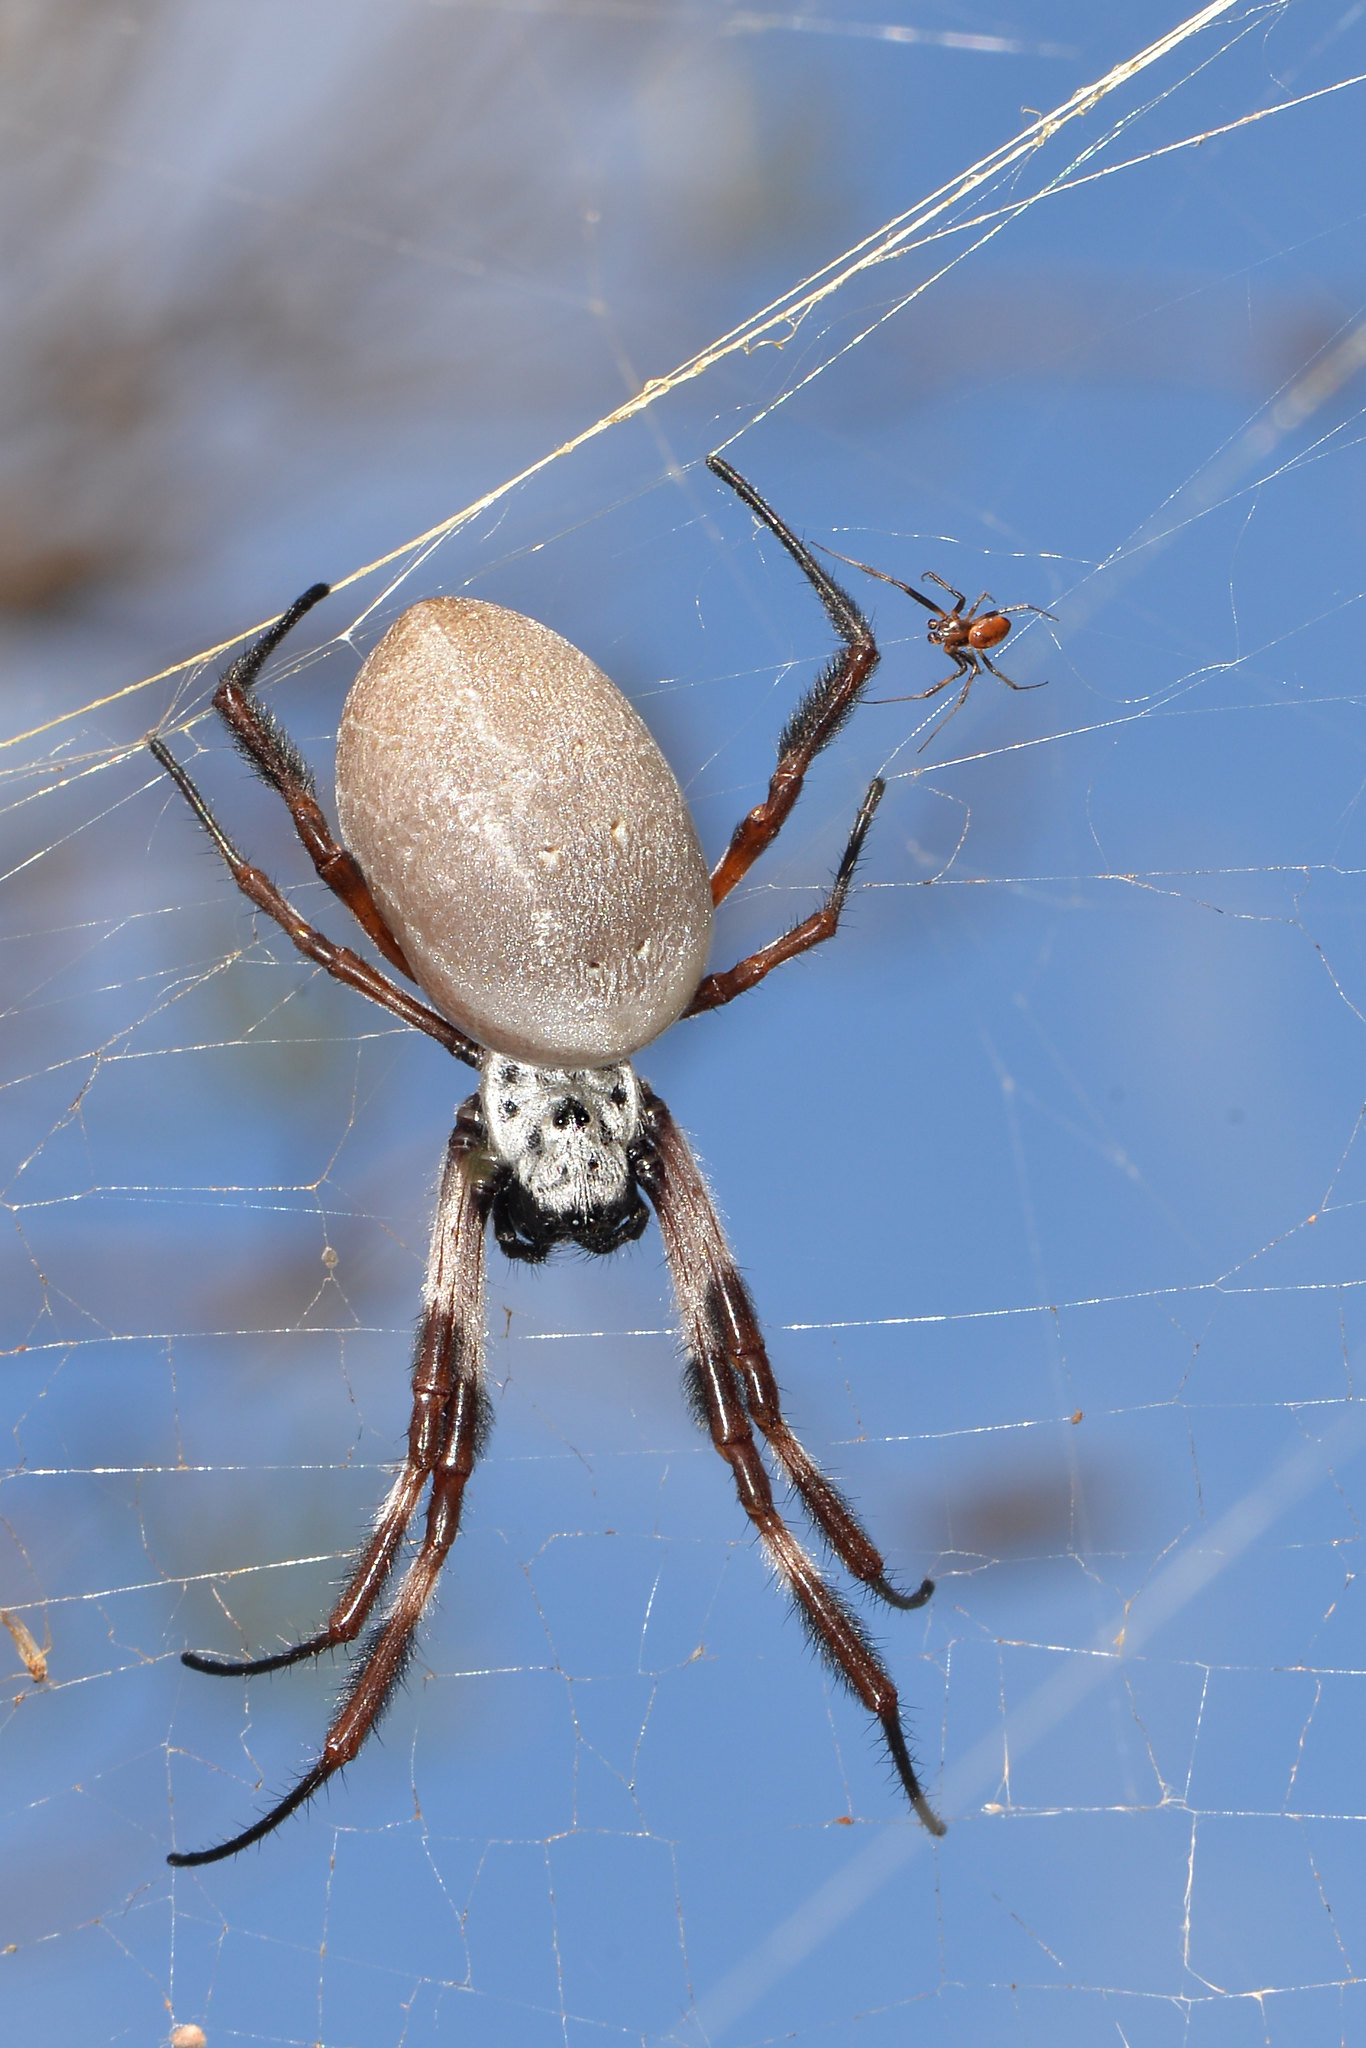 Golden Orb Spider | Flickr - Photo Sharing!